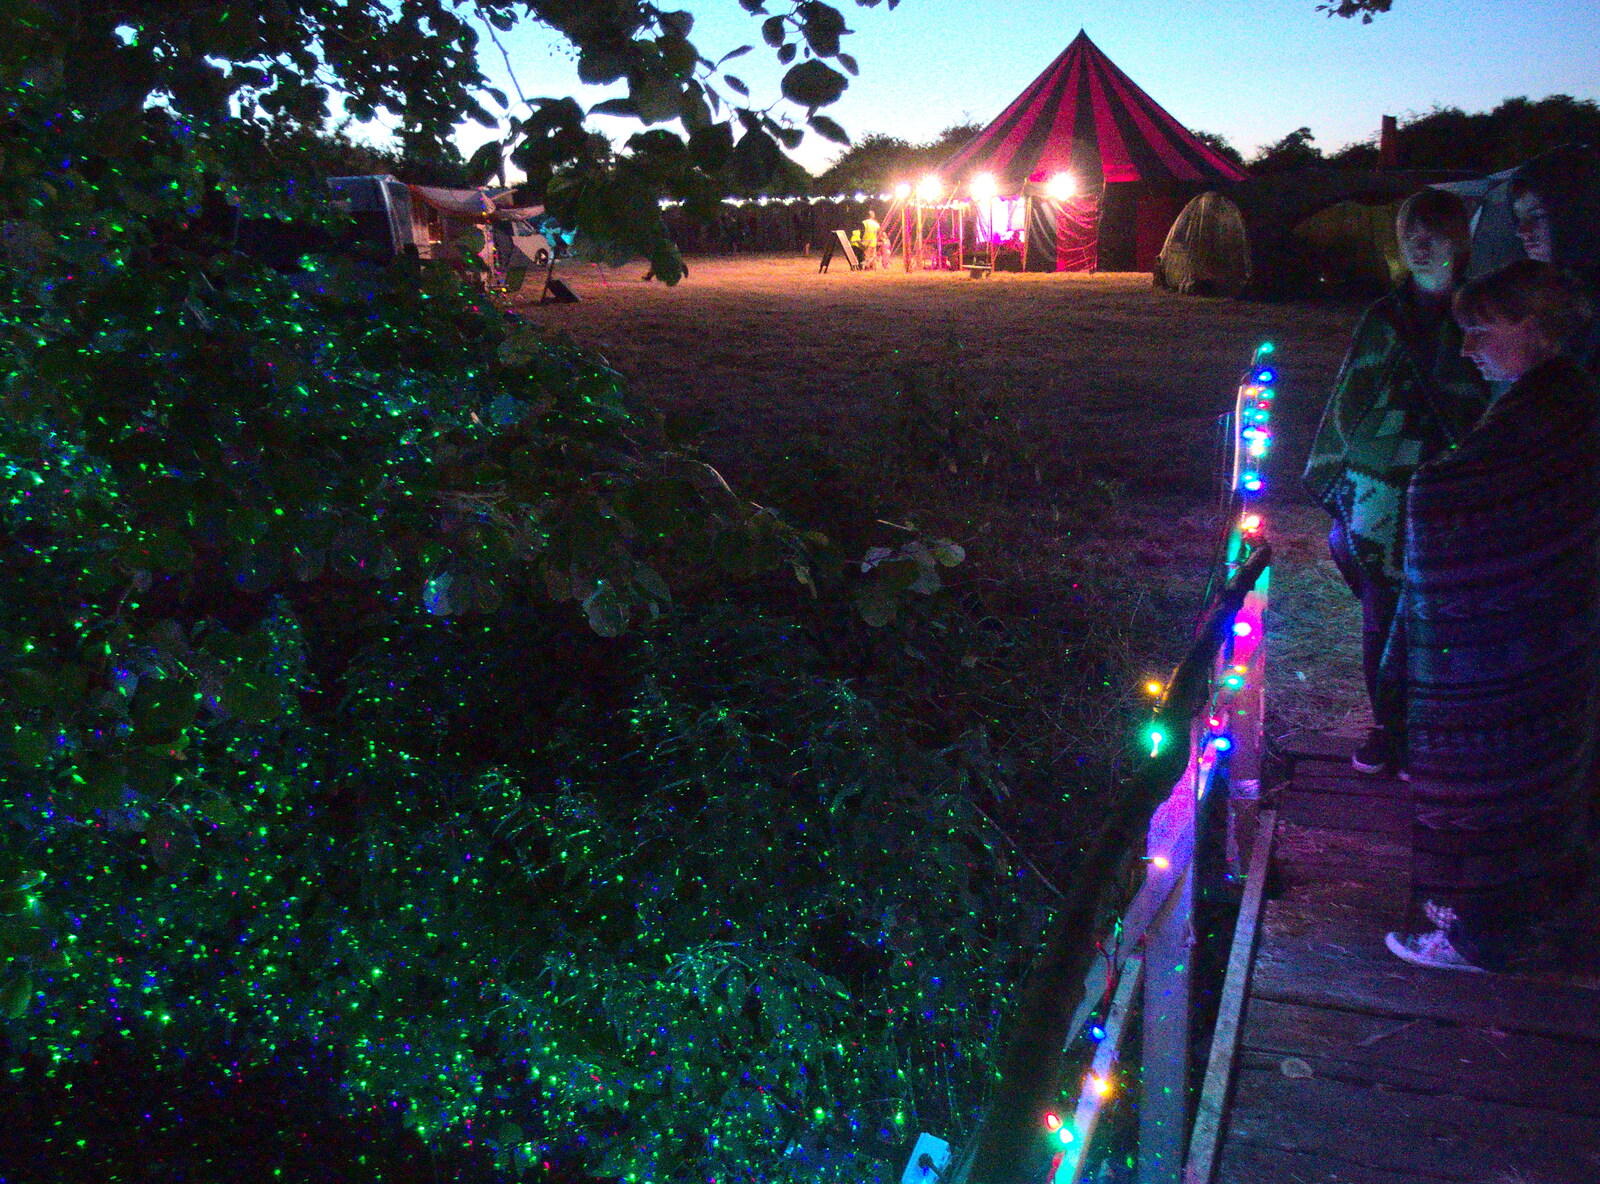 Lights in the trees, like fireflies from WoW Festival, Burston, Norfolk - 29th June - 1st July 2018